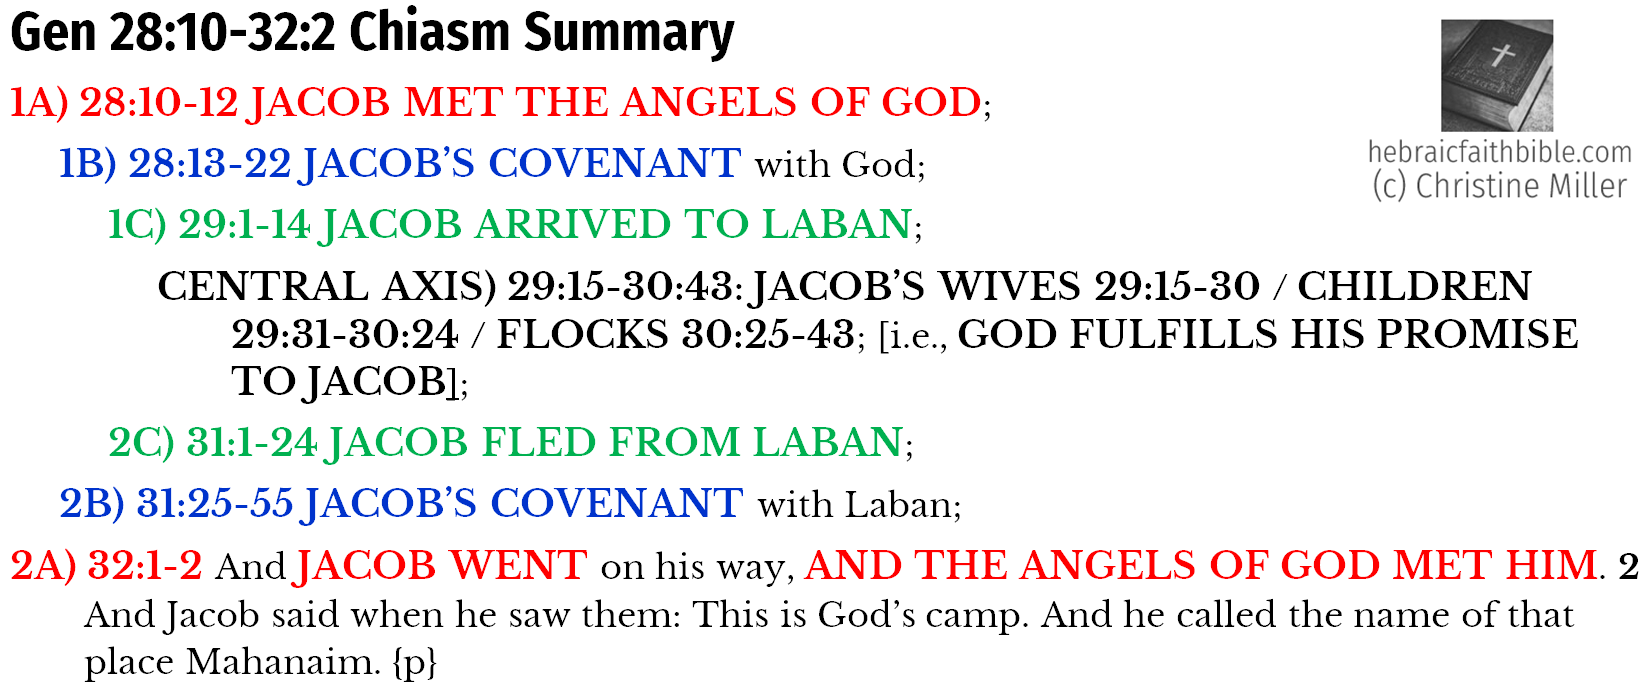 Gen 28:10-32:2 Vayetze Chiasm Summary | hebraicfaithbible.com